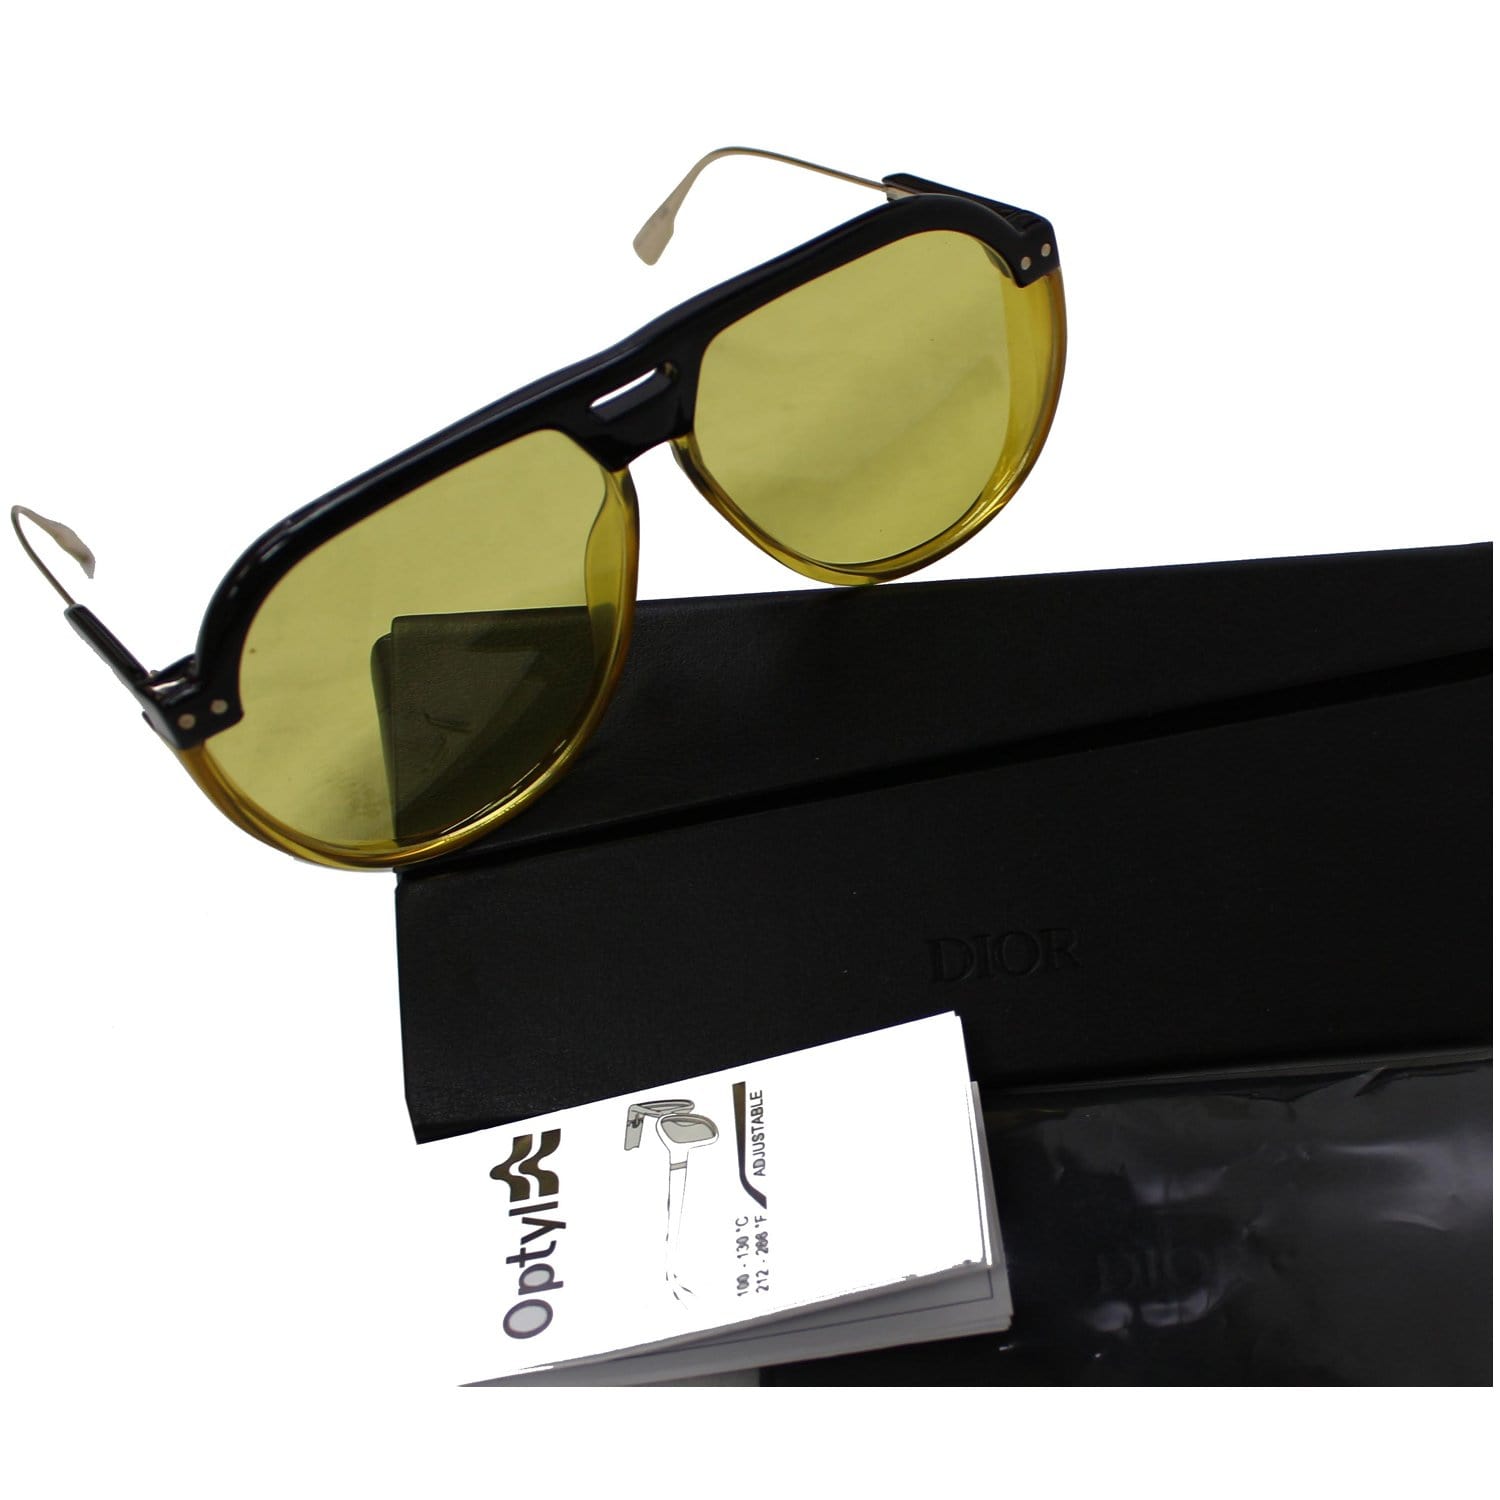 DiorHighlight S2I Translucent Yellow and Pink Rectangular Sunglasses  DIOR  FI